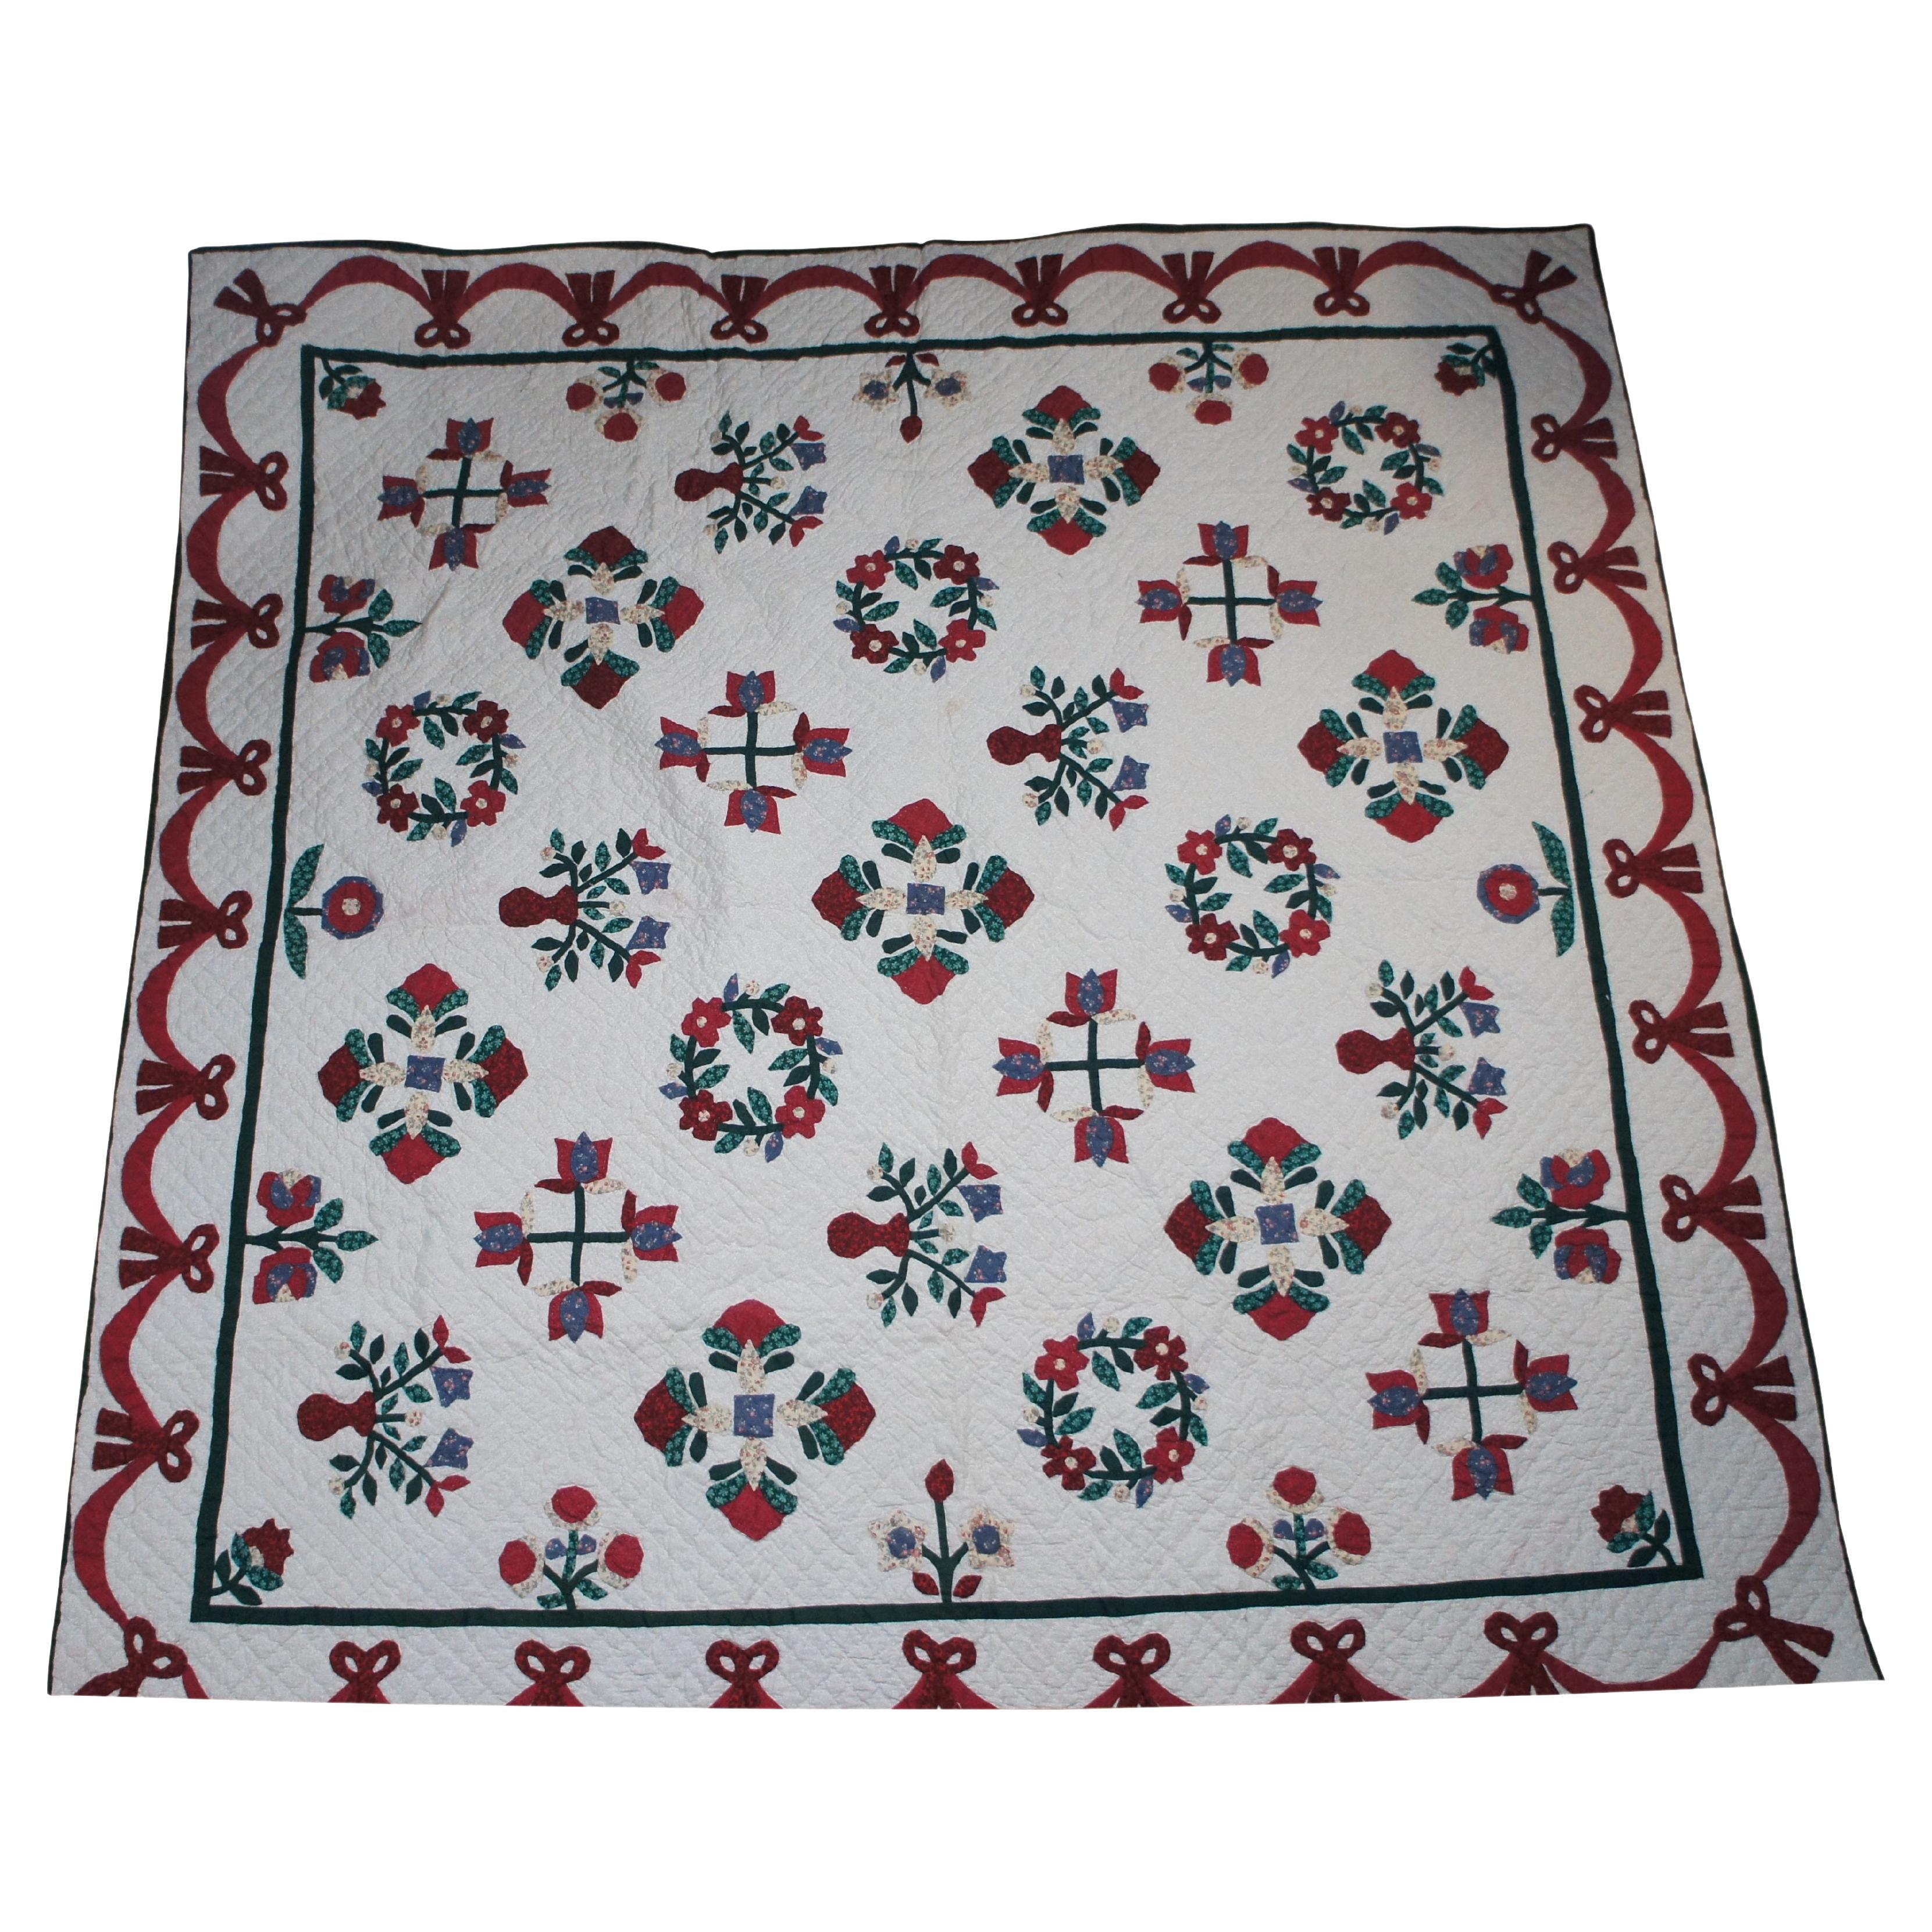 Vintage Hand Sewn Red & Green Floral Quilt Full Size Bedspread Applique Patchwrk For Sale